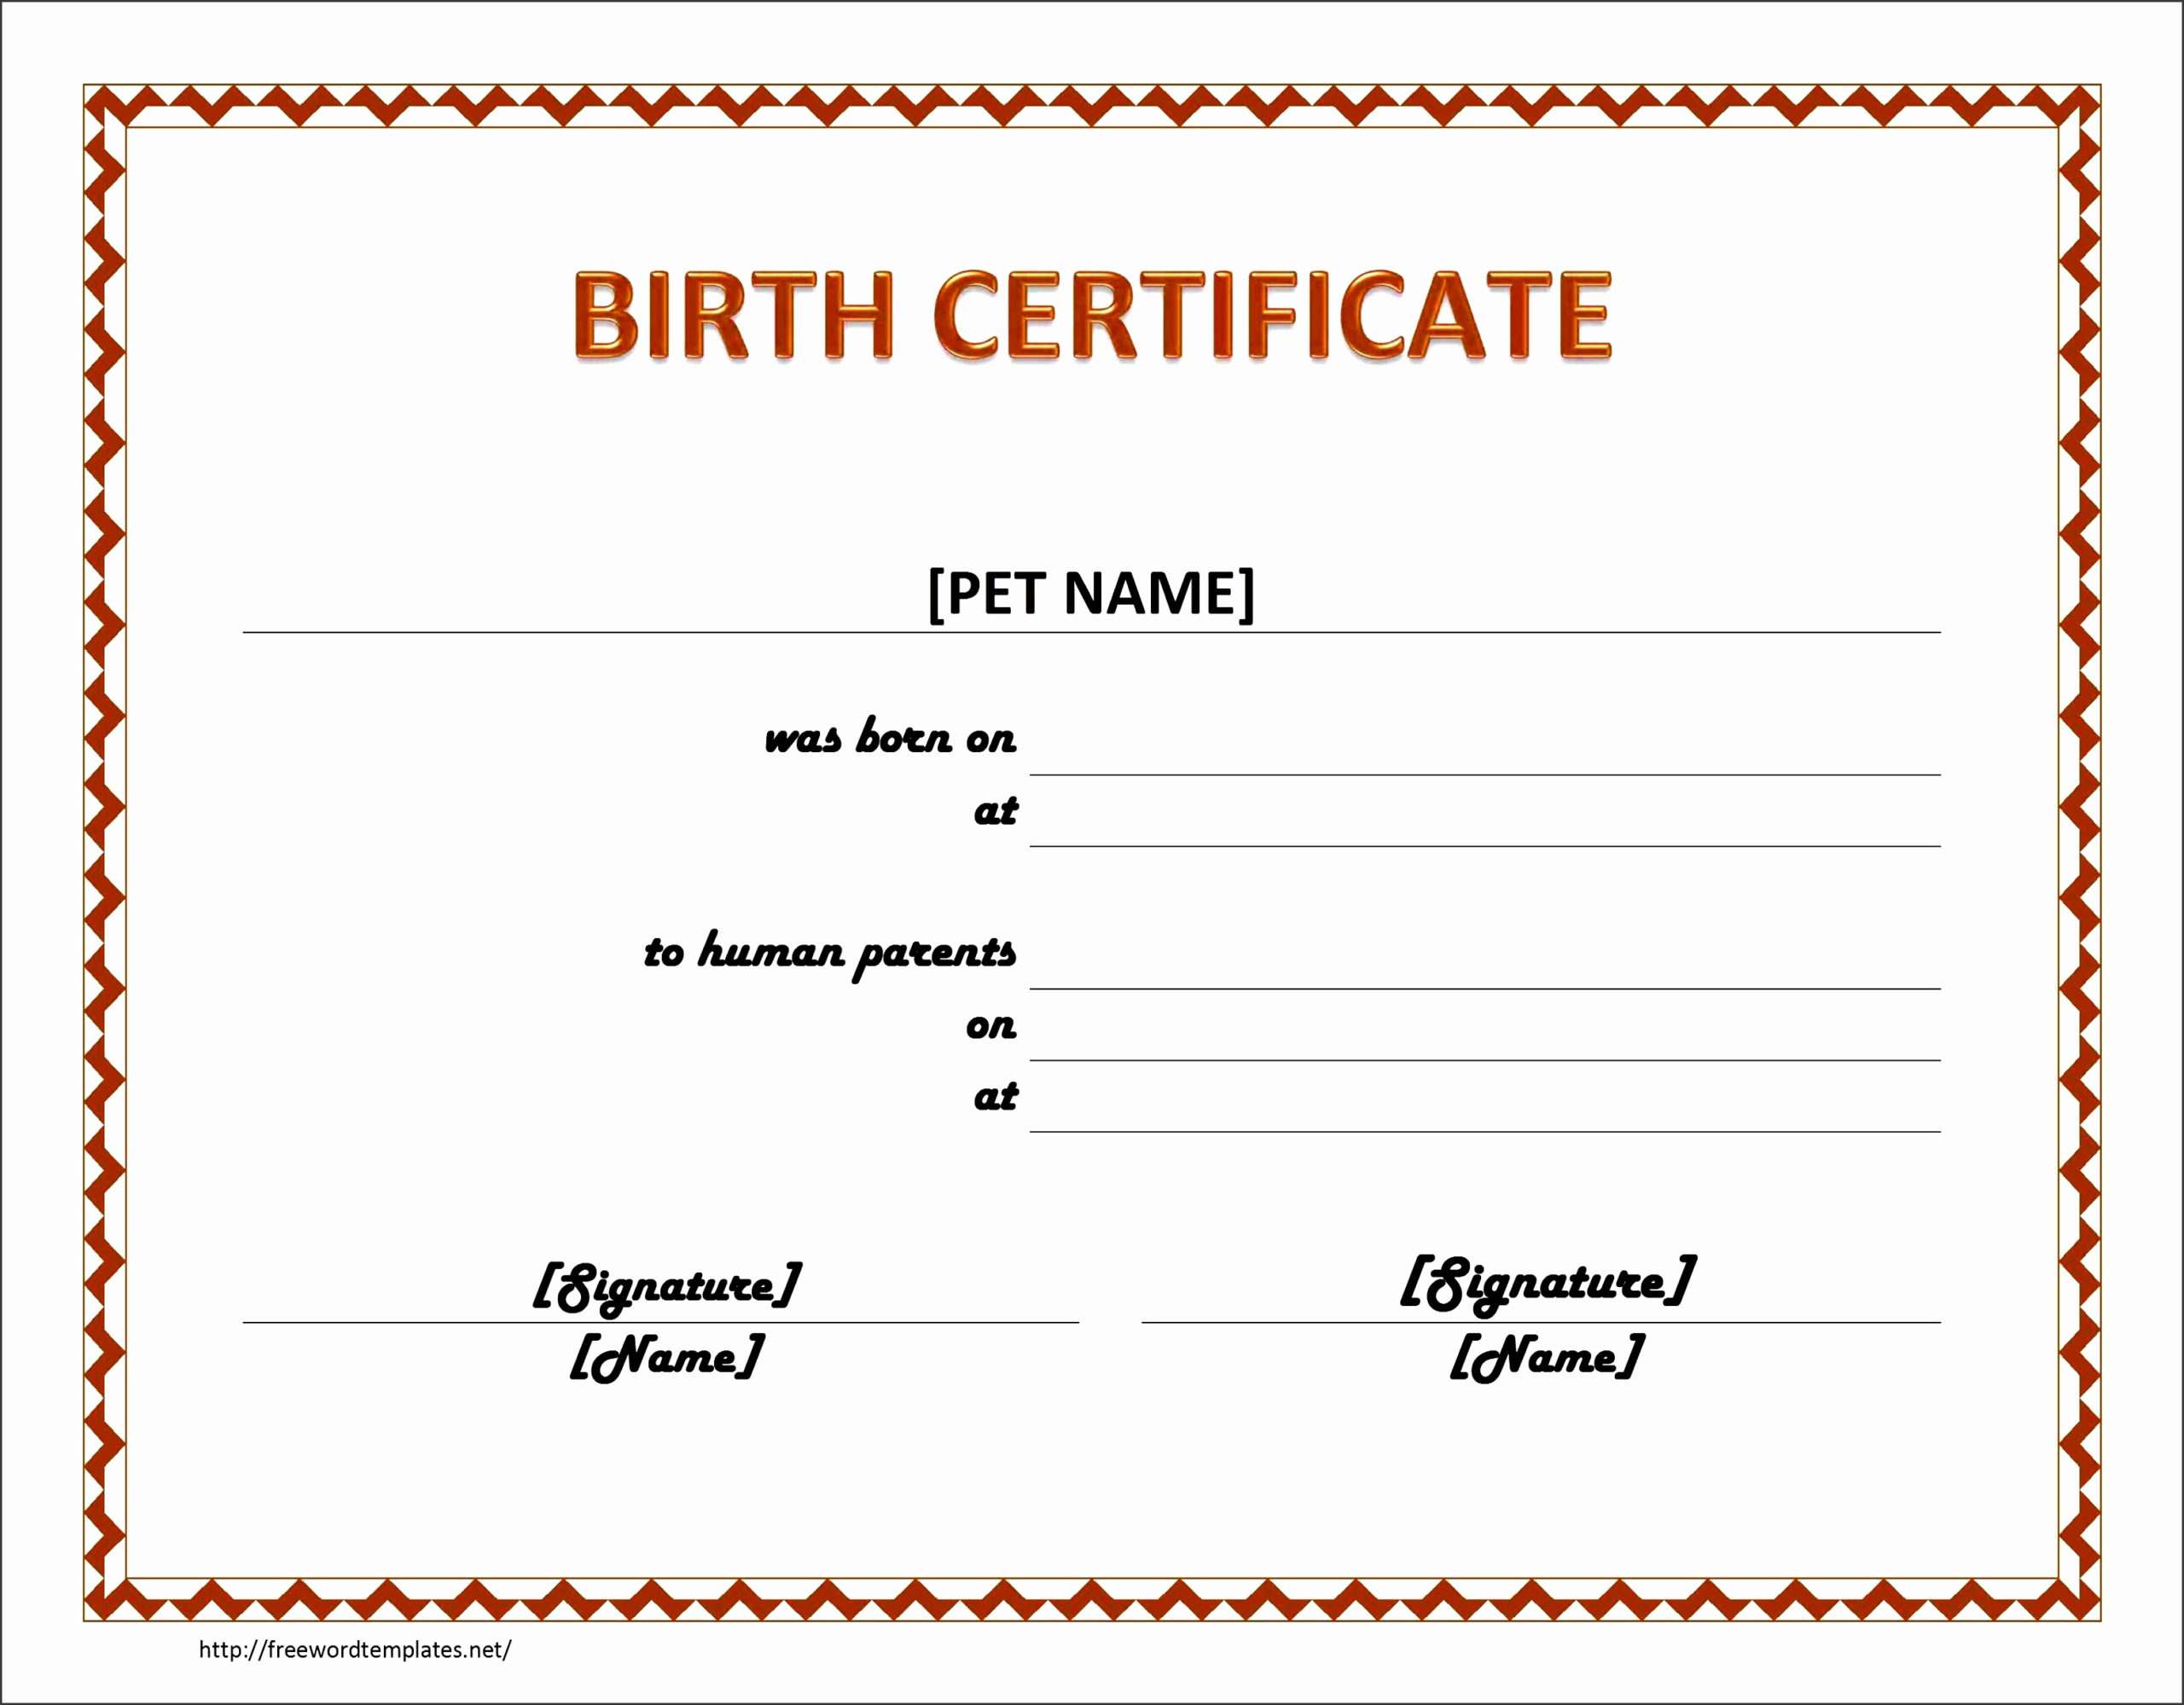 10 Editable Birth Certificate Template - Sampletemplatess inside Free Puppy Birth Certificate Template